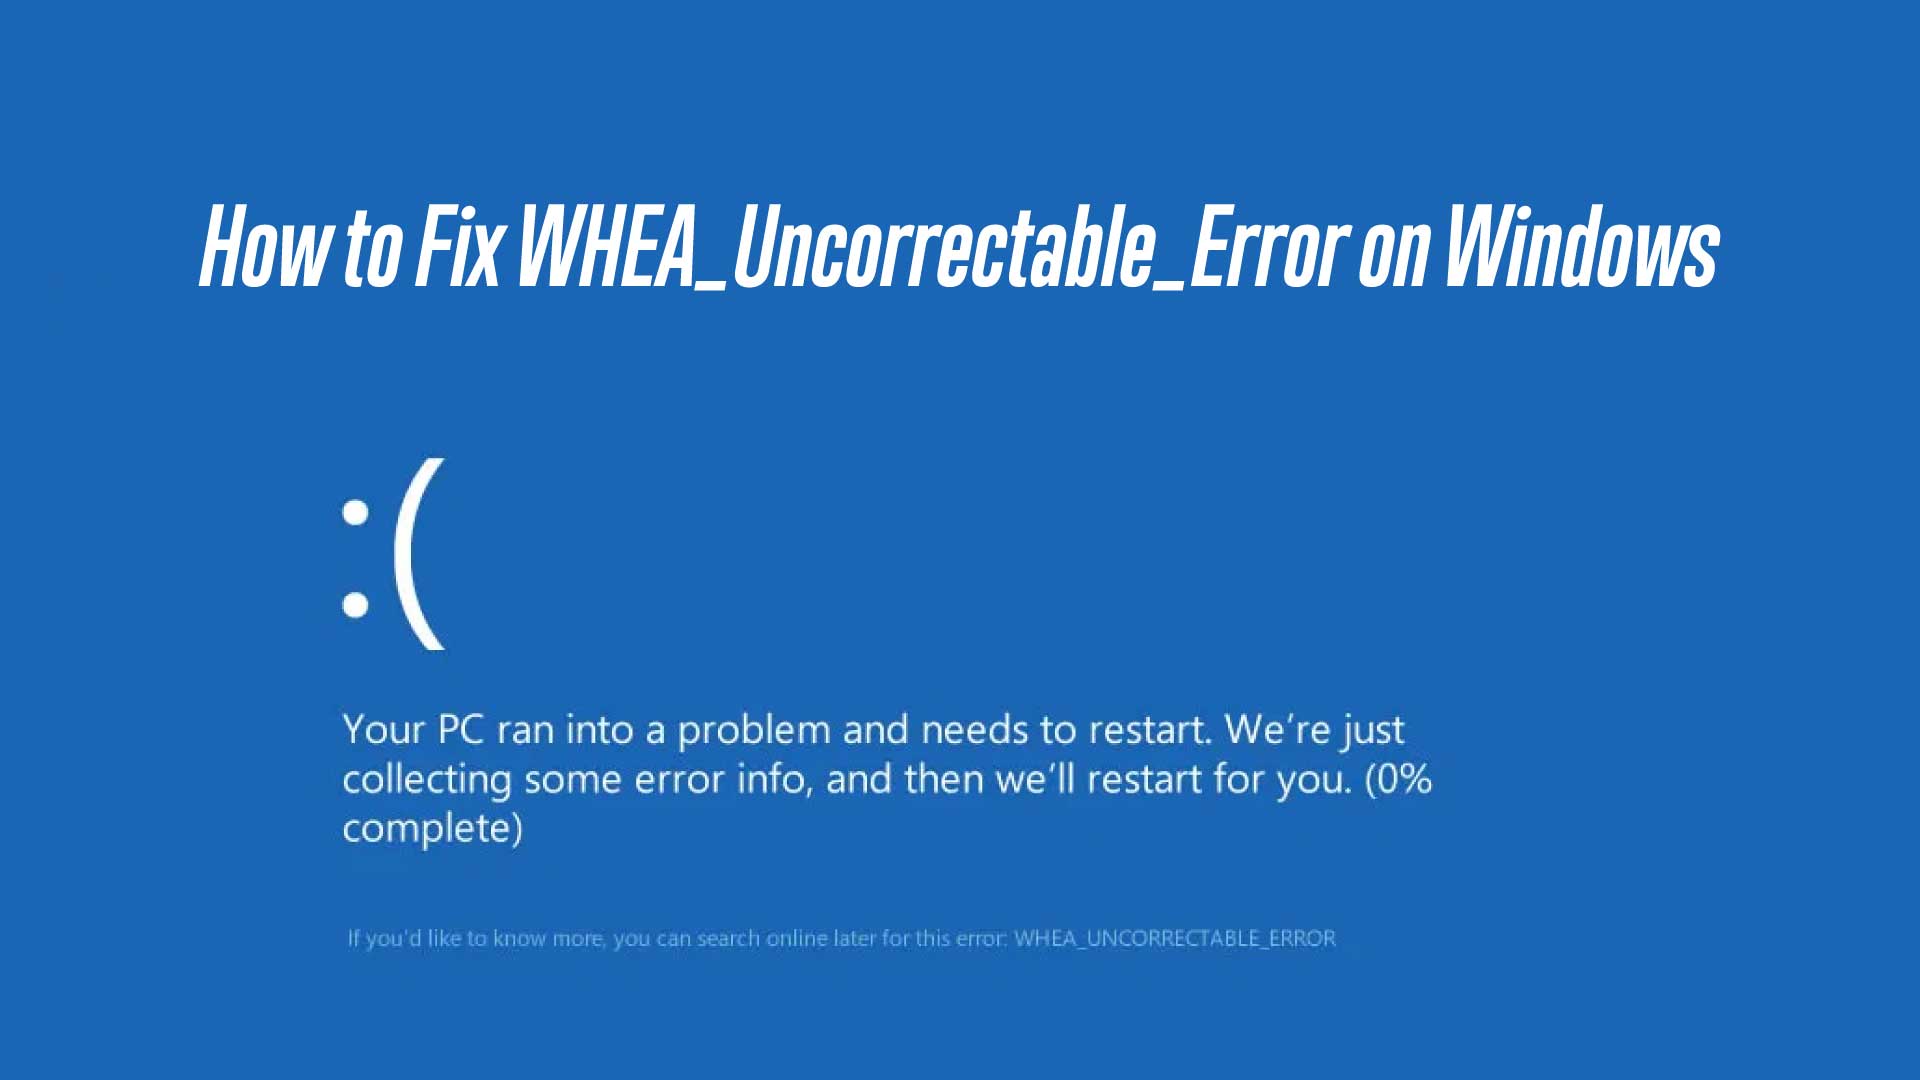 How To Fix WHEA Uncorrectable Error (0x0000124) on Windows 10